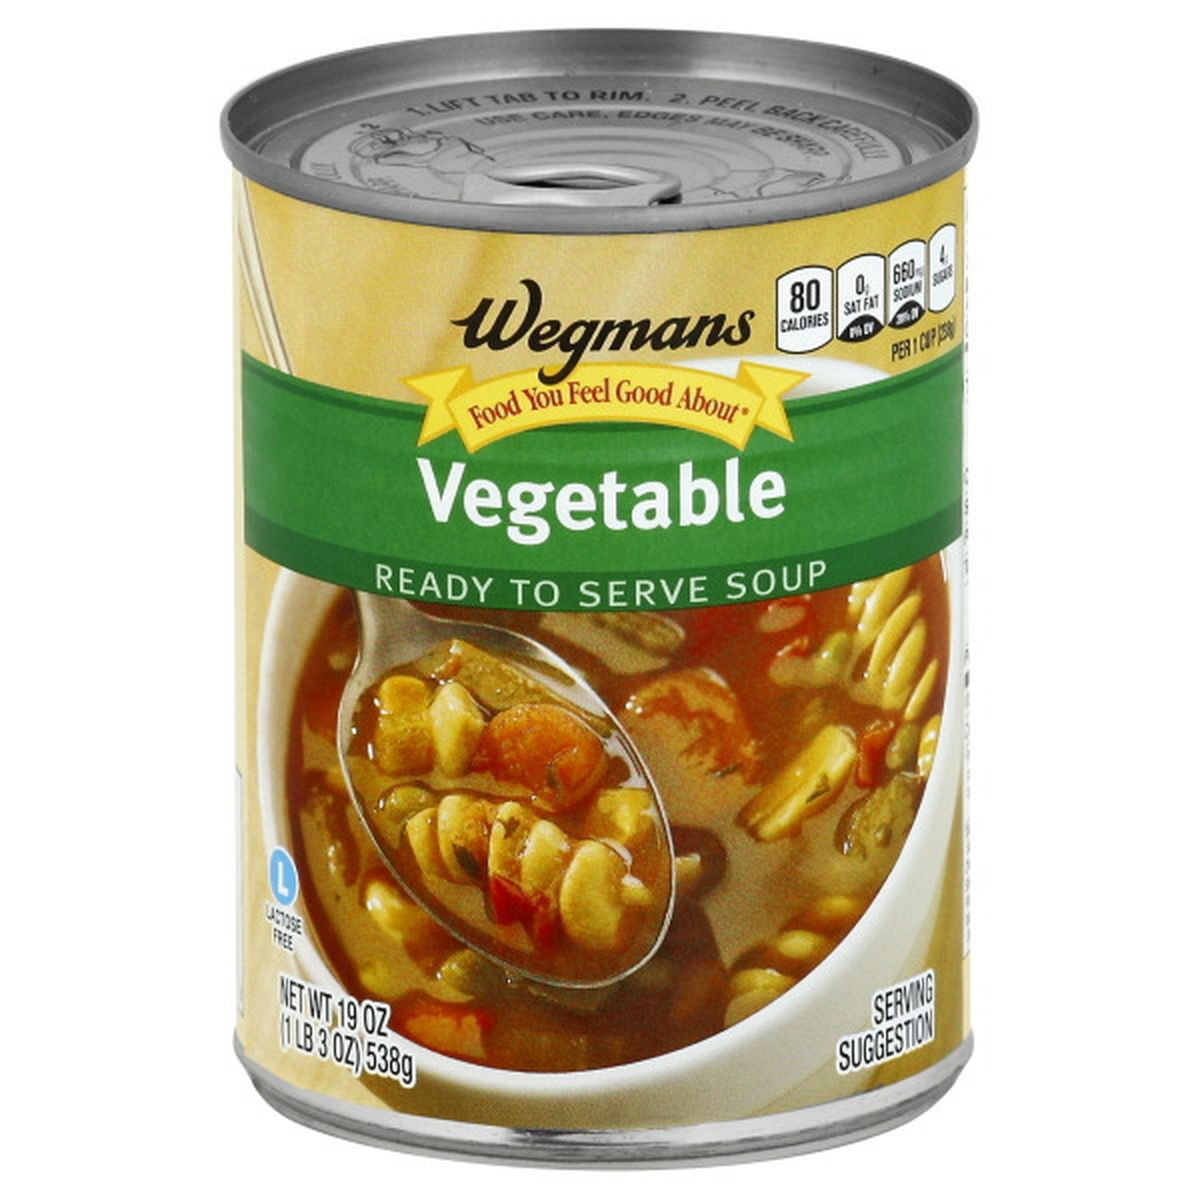 Calories in Wegmans Vegetable Soup